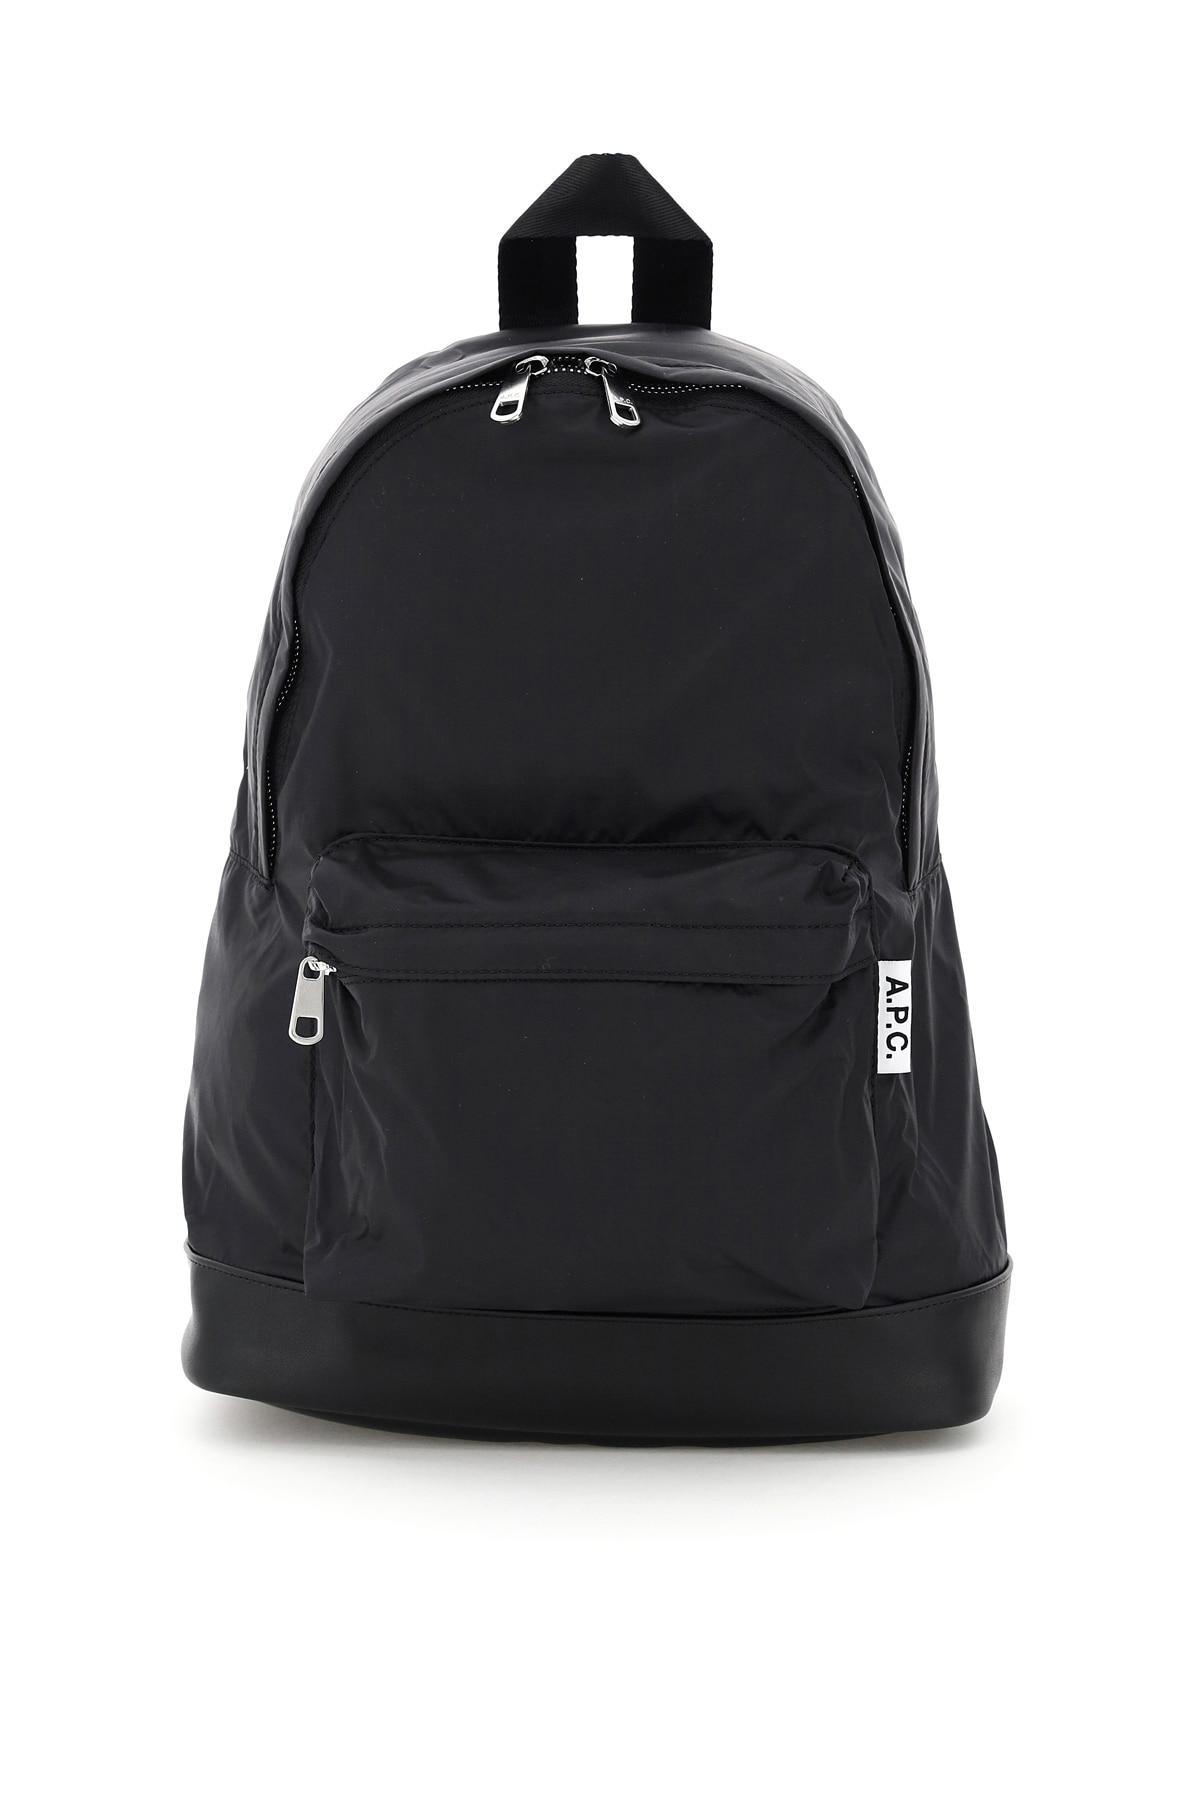 A.P.C. Nylon Backpack in Black for Men | Lyst